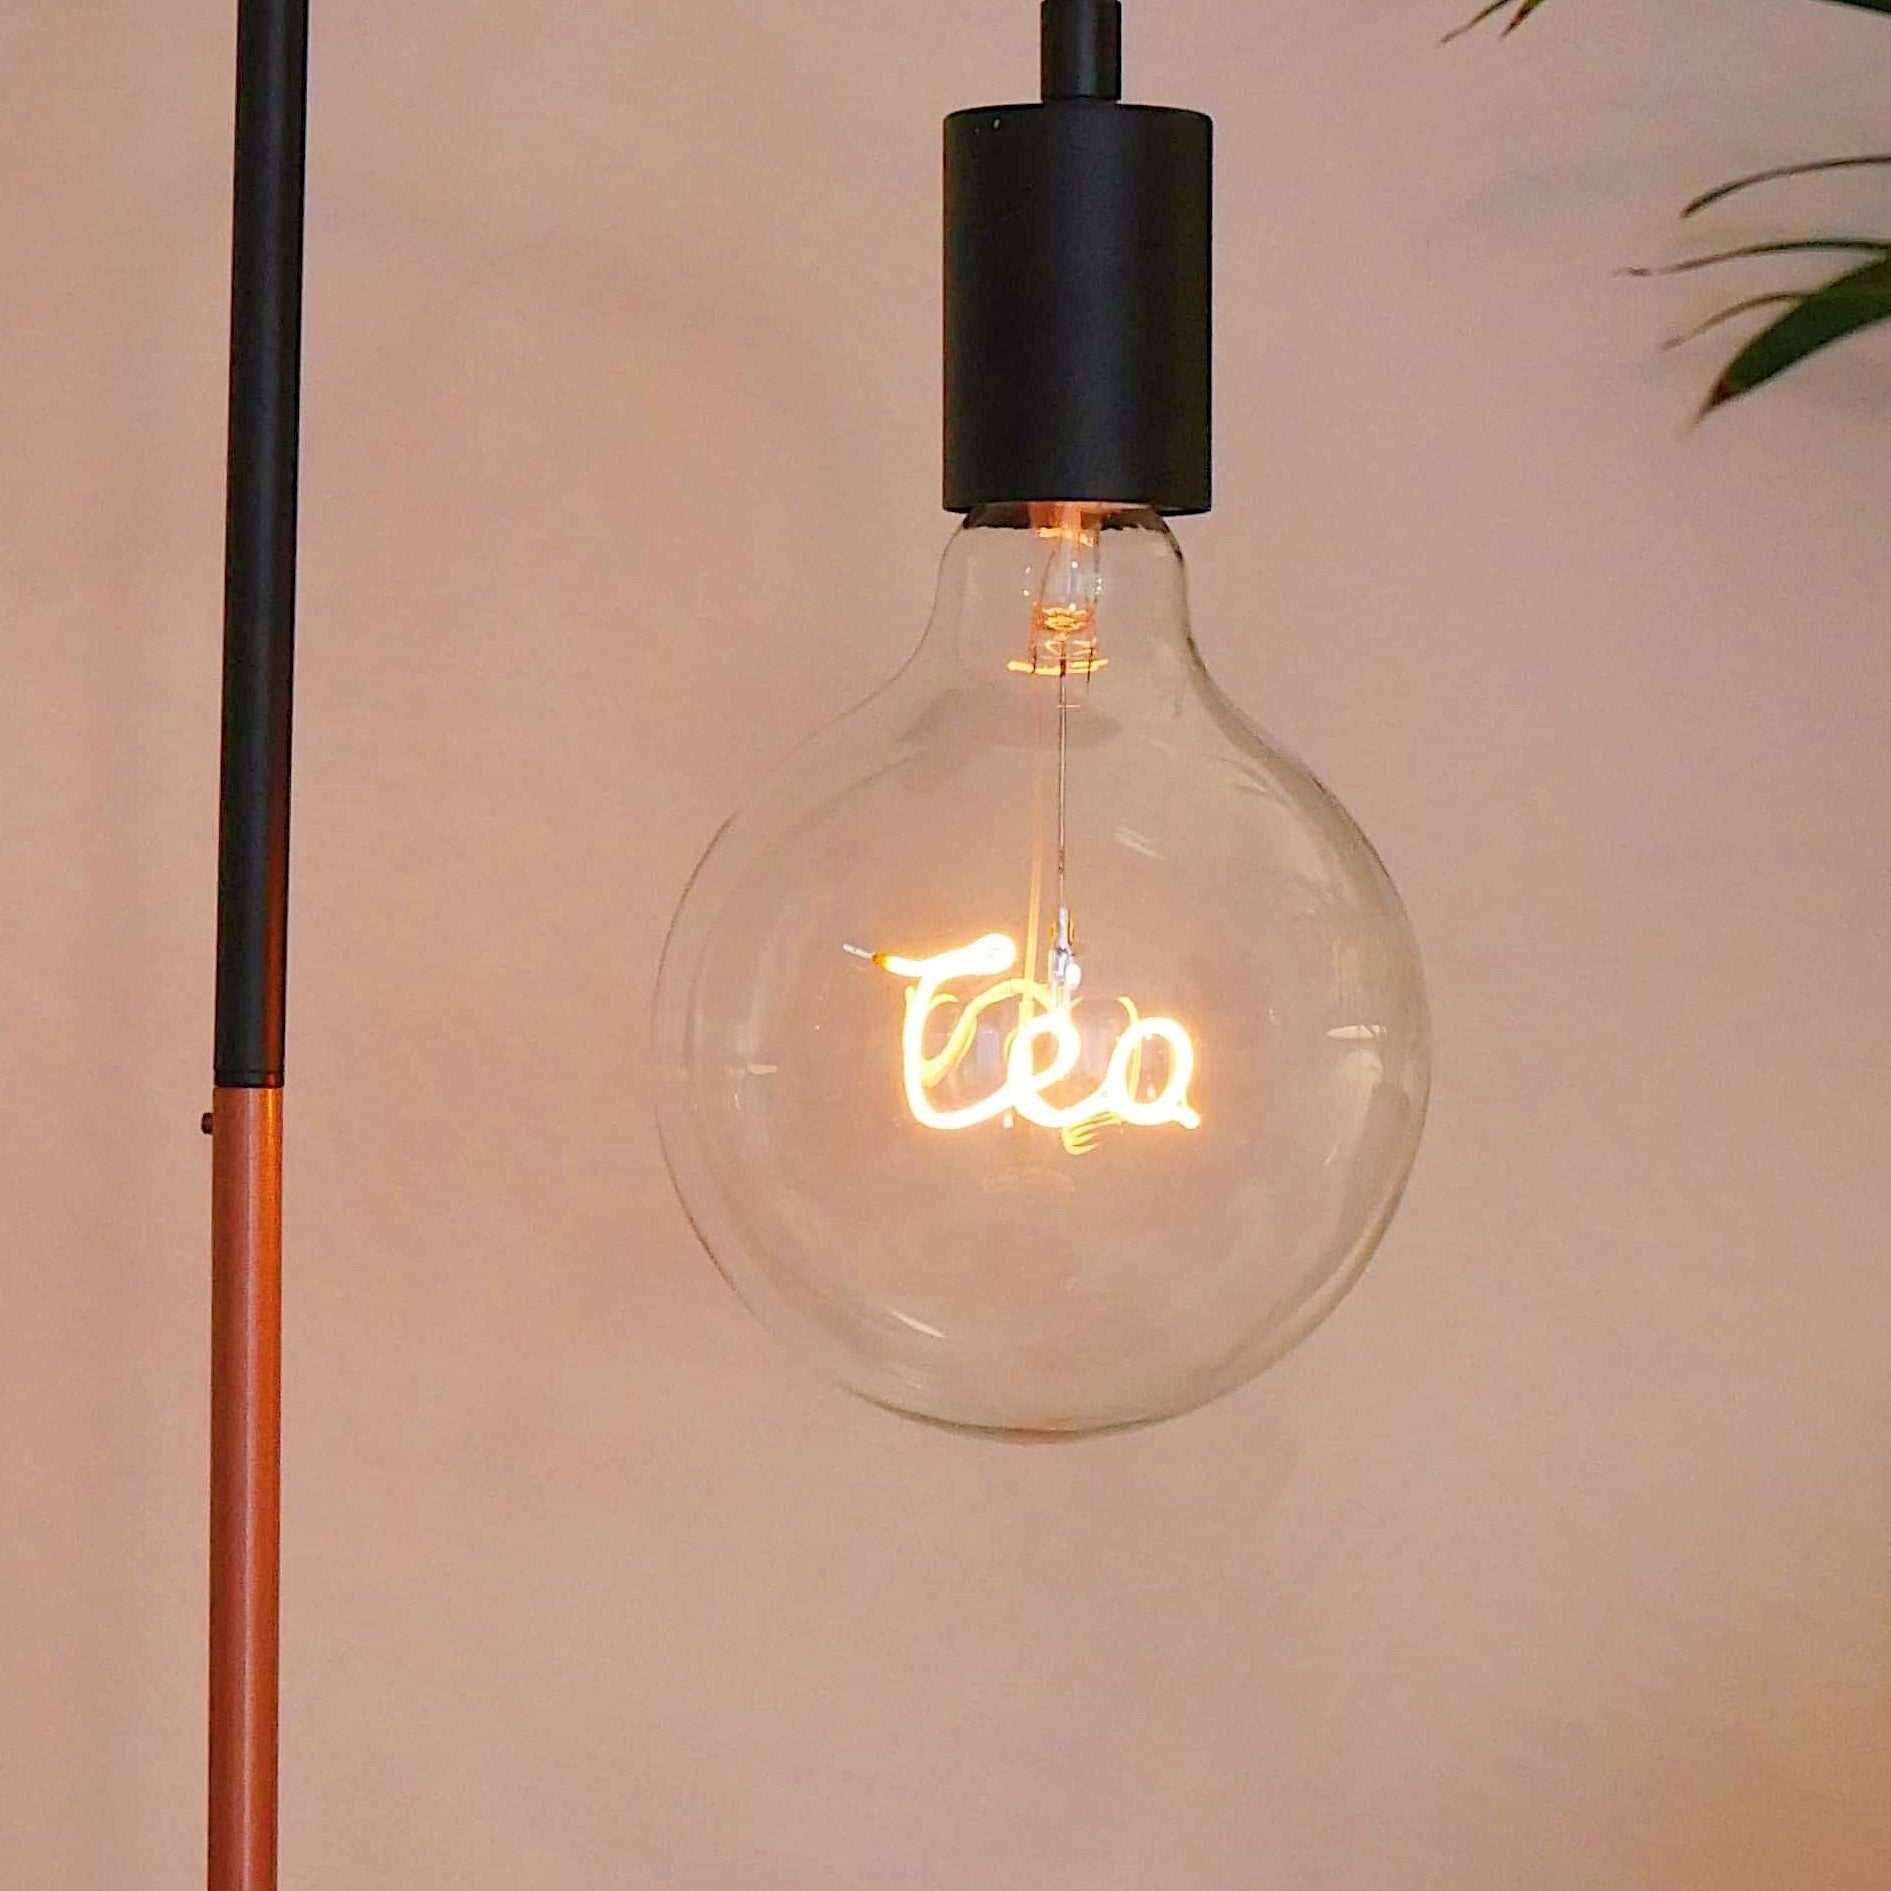 Tea LED Light Bulb - Screw Up Pendant Fitting - E27 Edison Dimmable